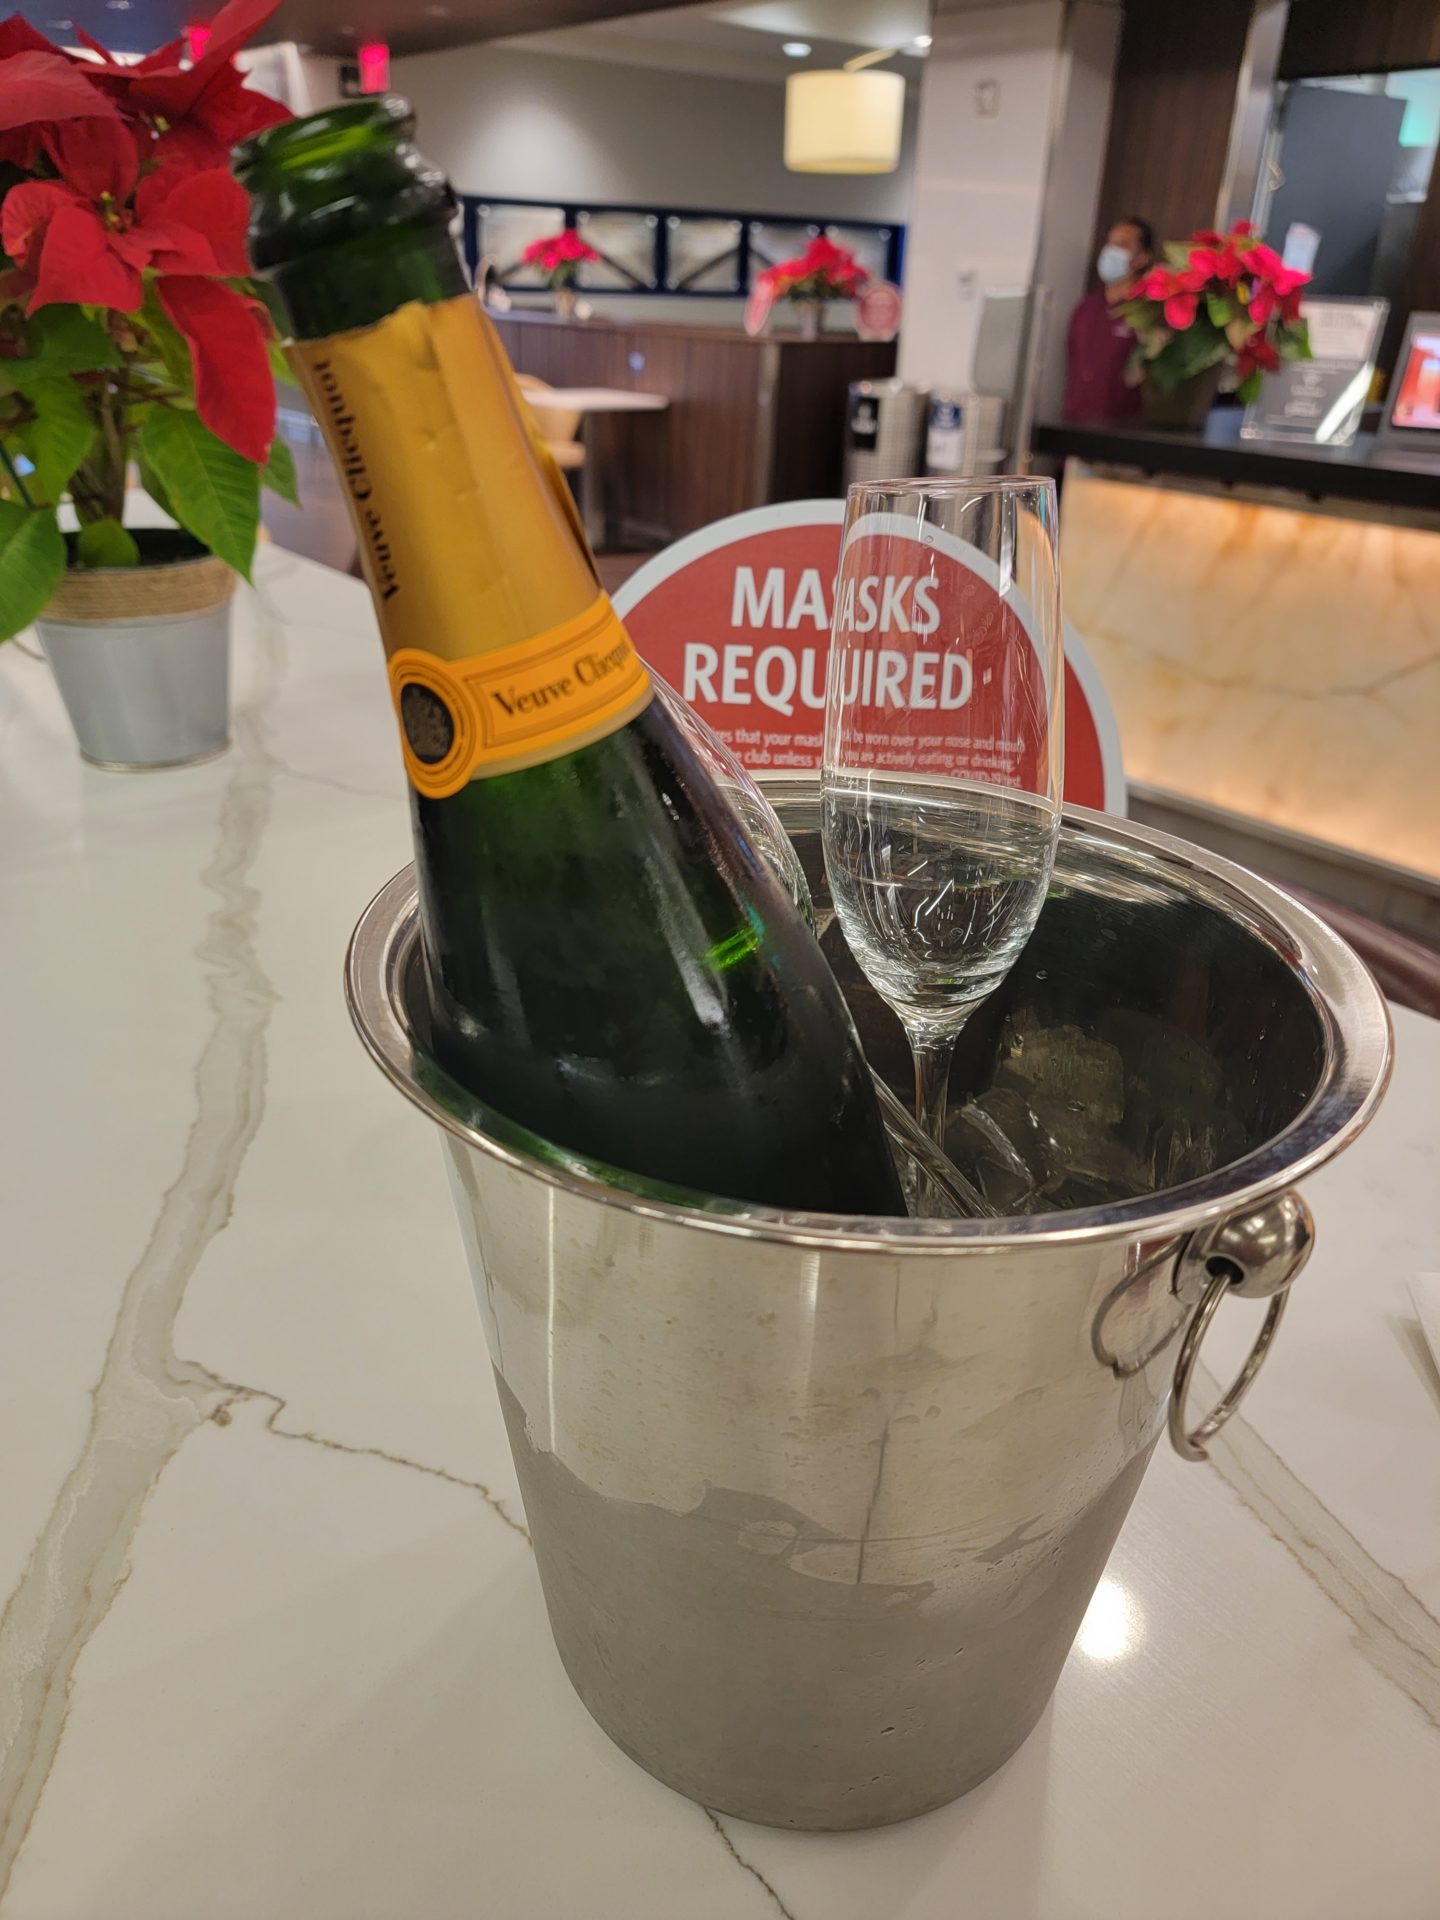 a bottle of champagne in a bucket